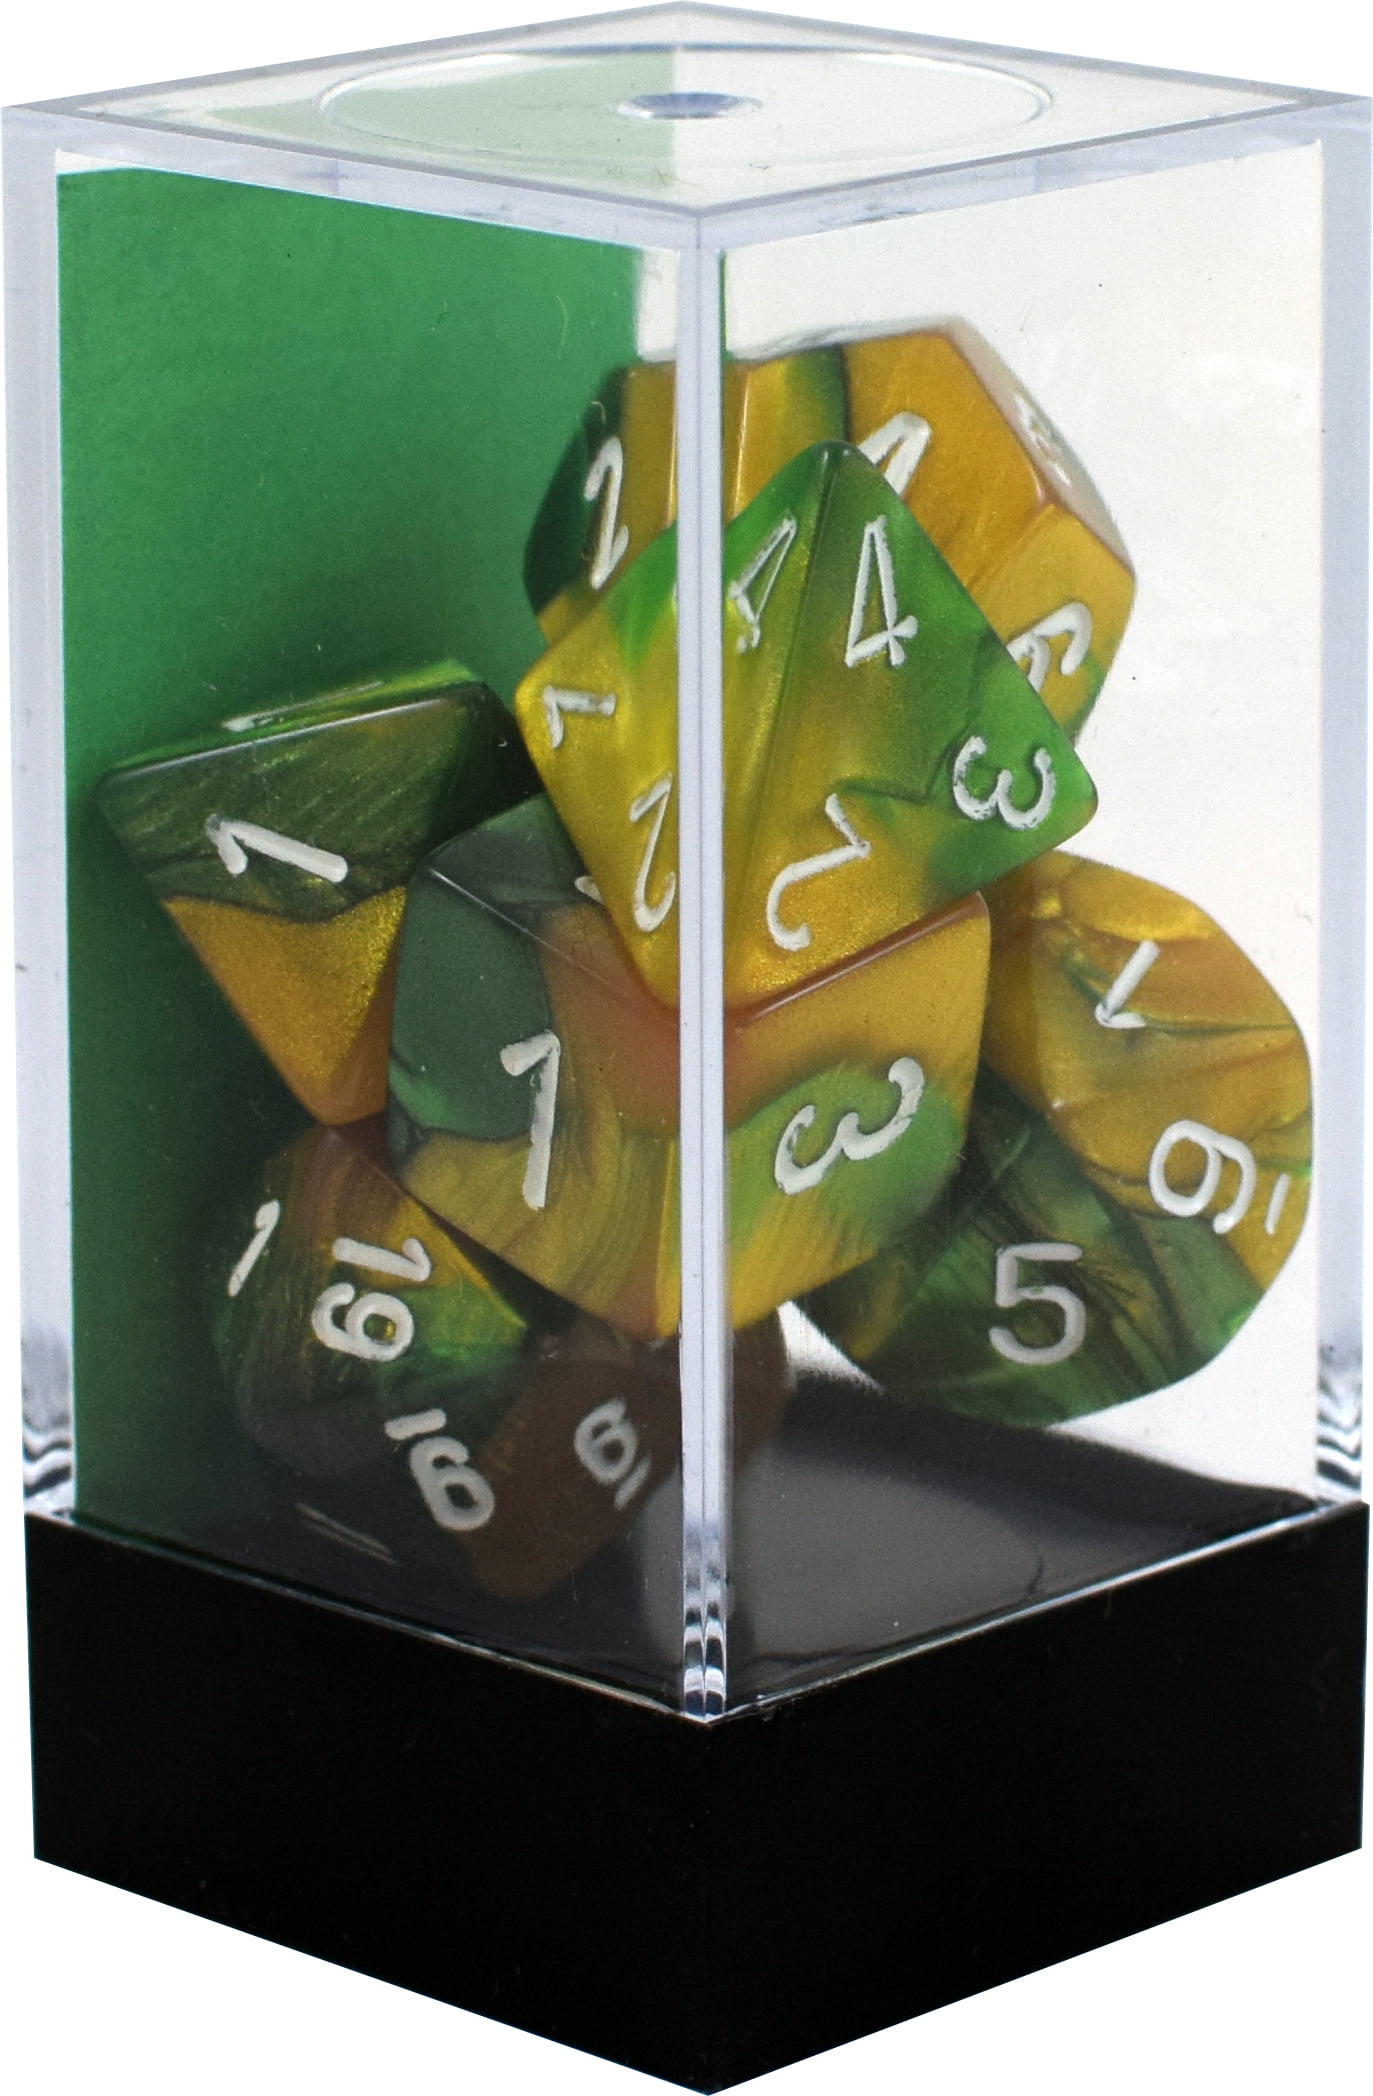 Chessex Chessex Gemini Gold-Green Cubo Set Boxed CHX26425 